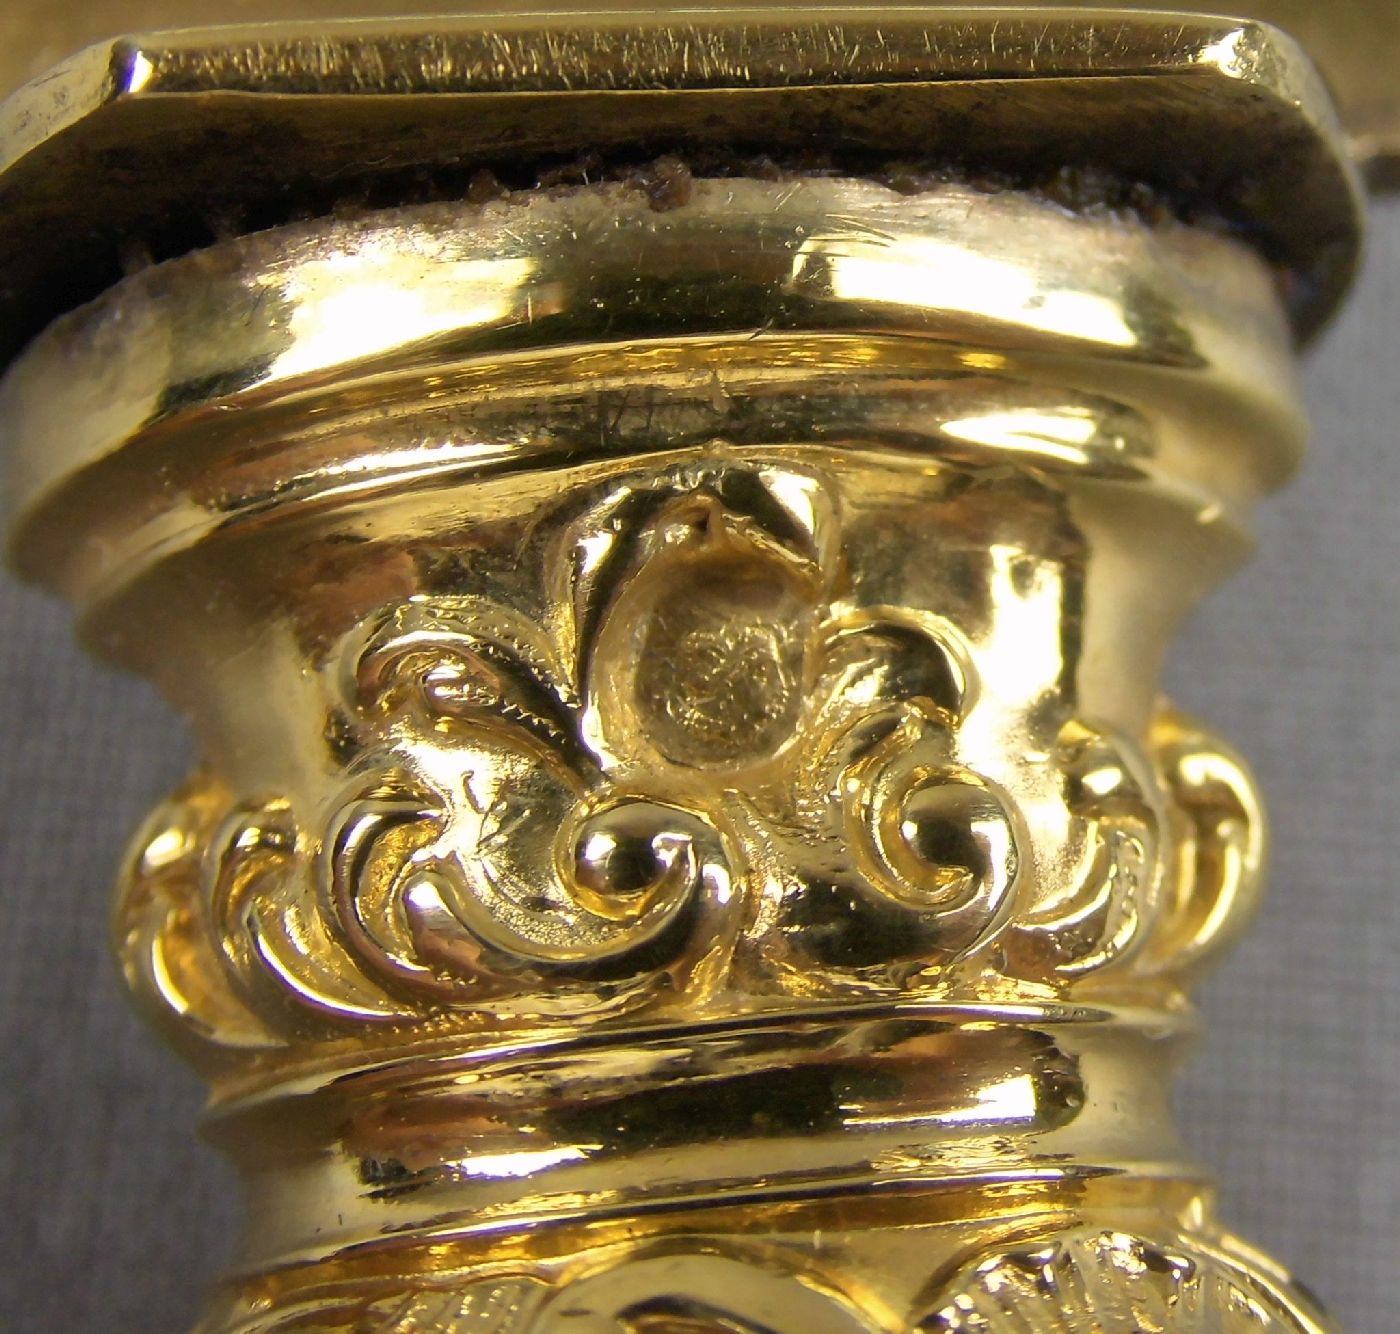 TRANCHIERBESTECK / VORLEGE - BESTECK in originaler Schatulle, 950er Silber, vergoldet, Frankreich, - Image 4 of 4